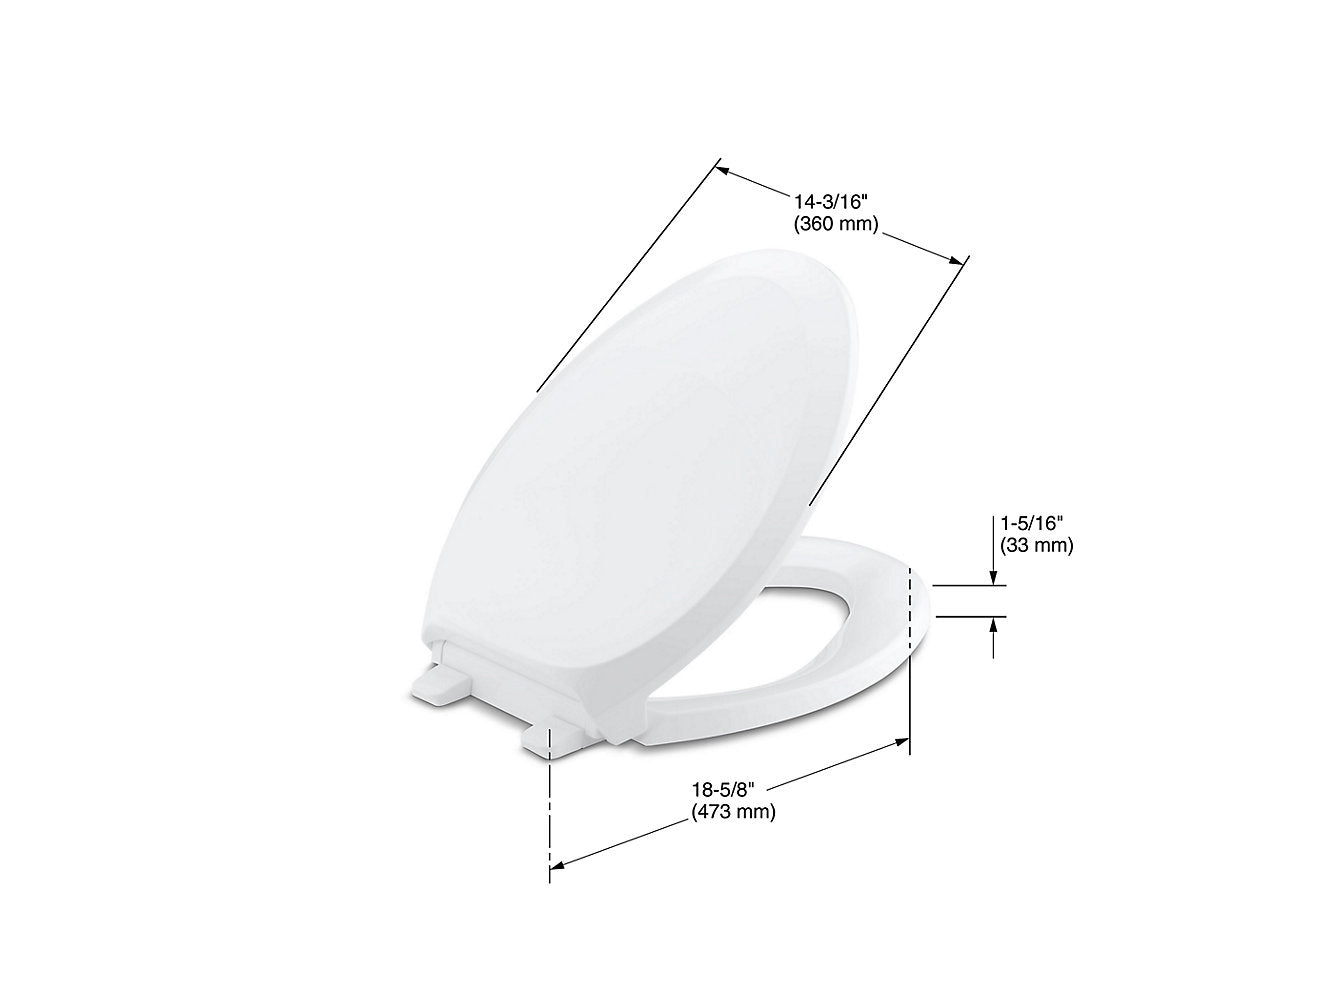 Kohler French Curve Quiet Close Elongated Toilet Seat - White